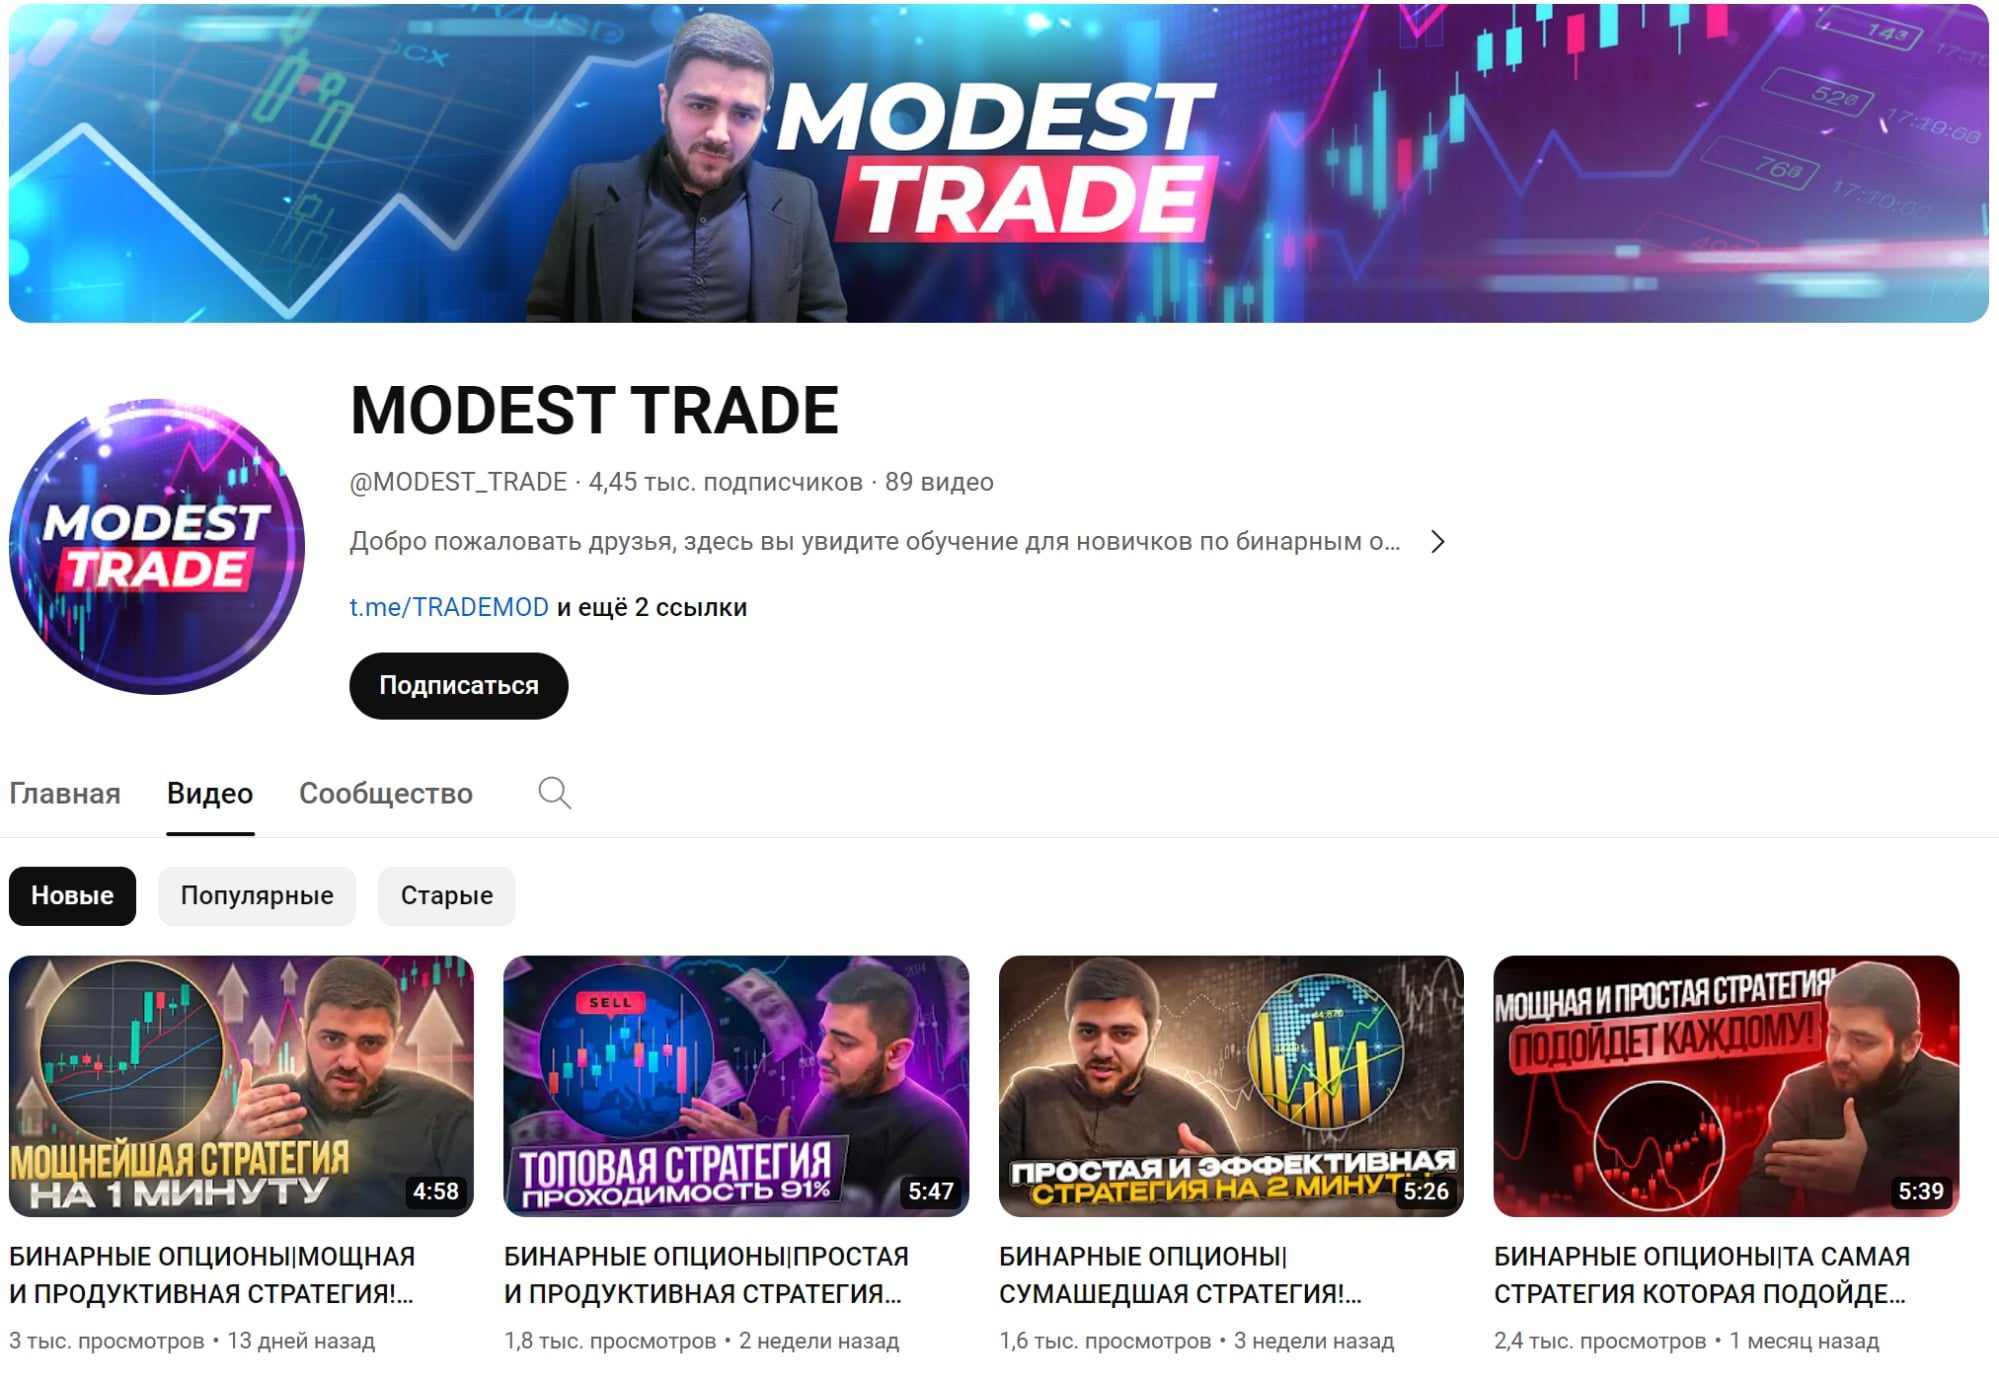 Modest Trade ютуб канал